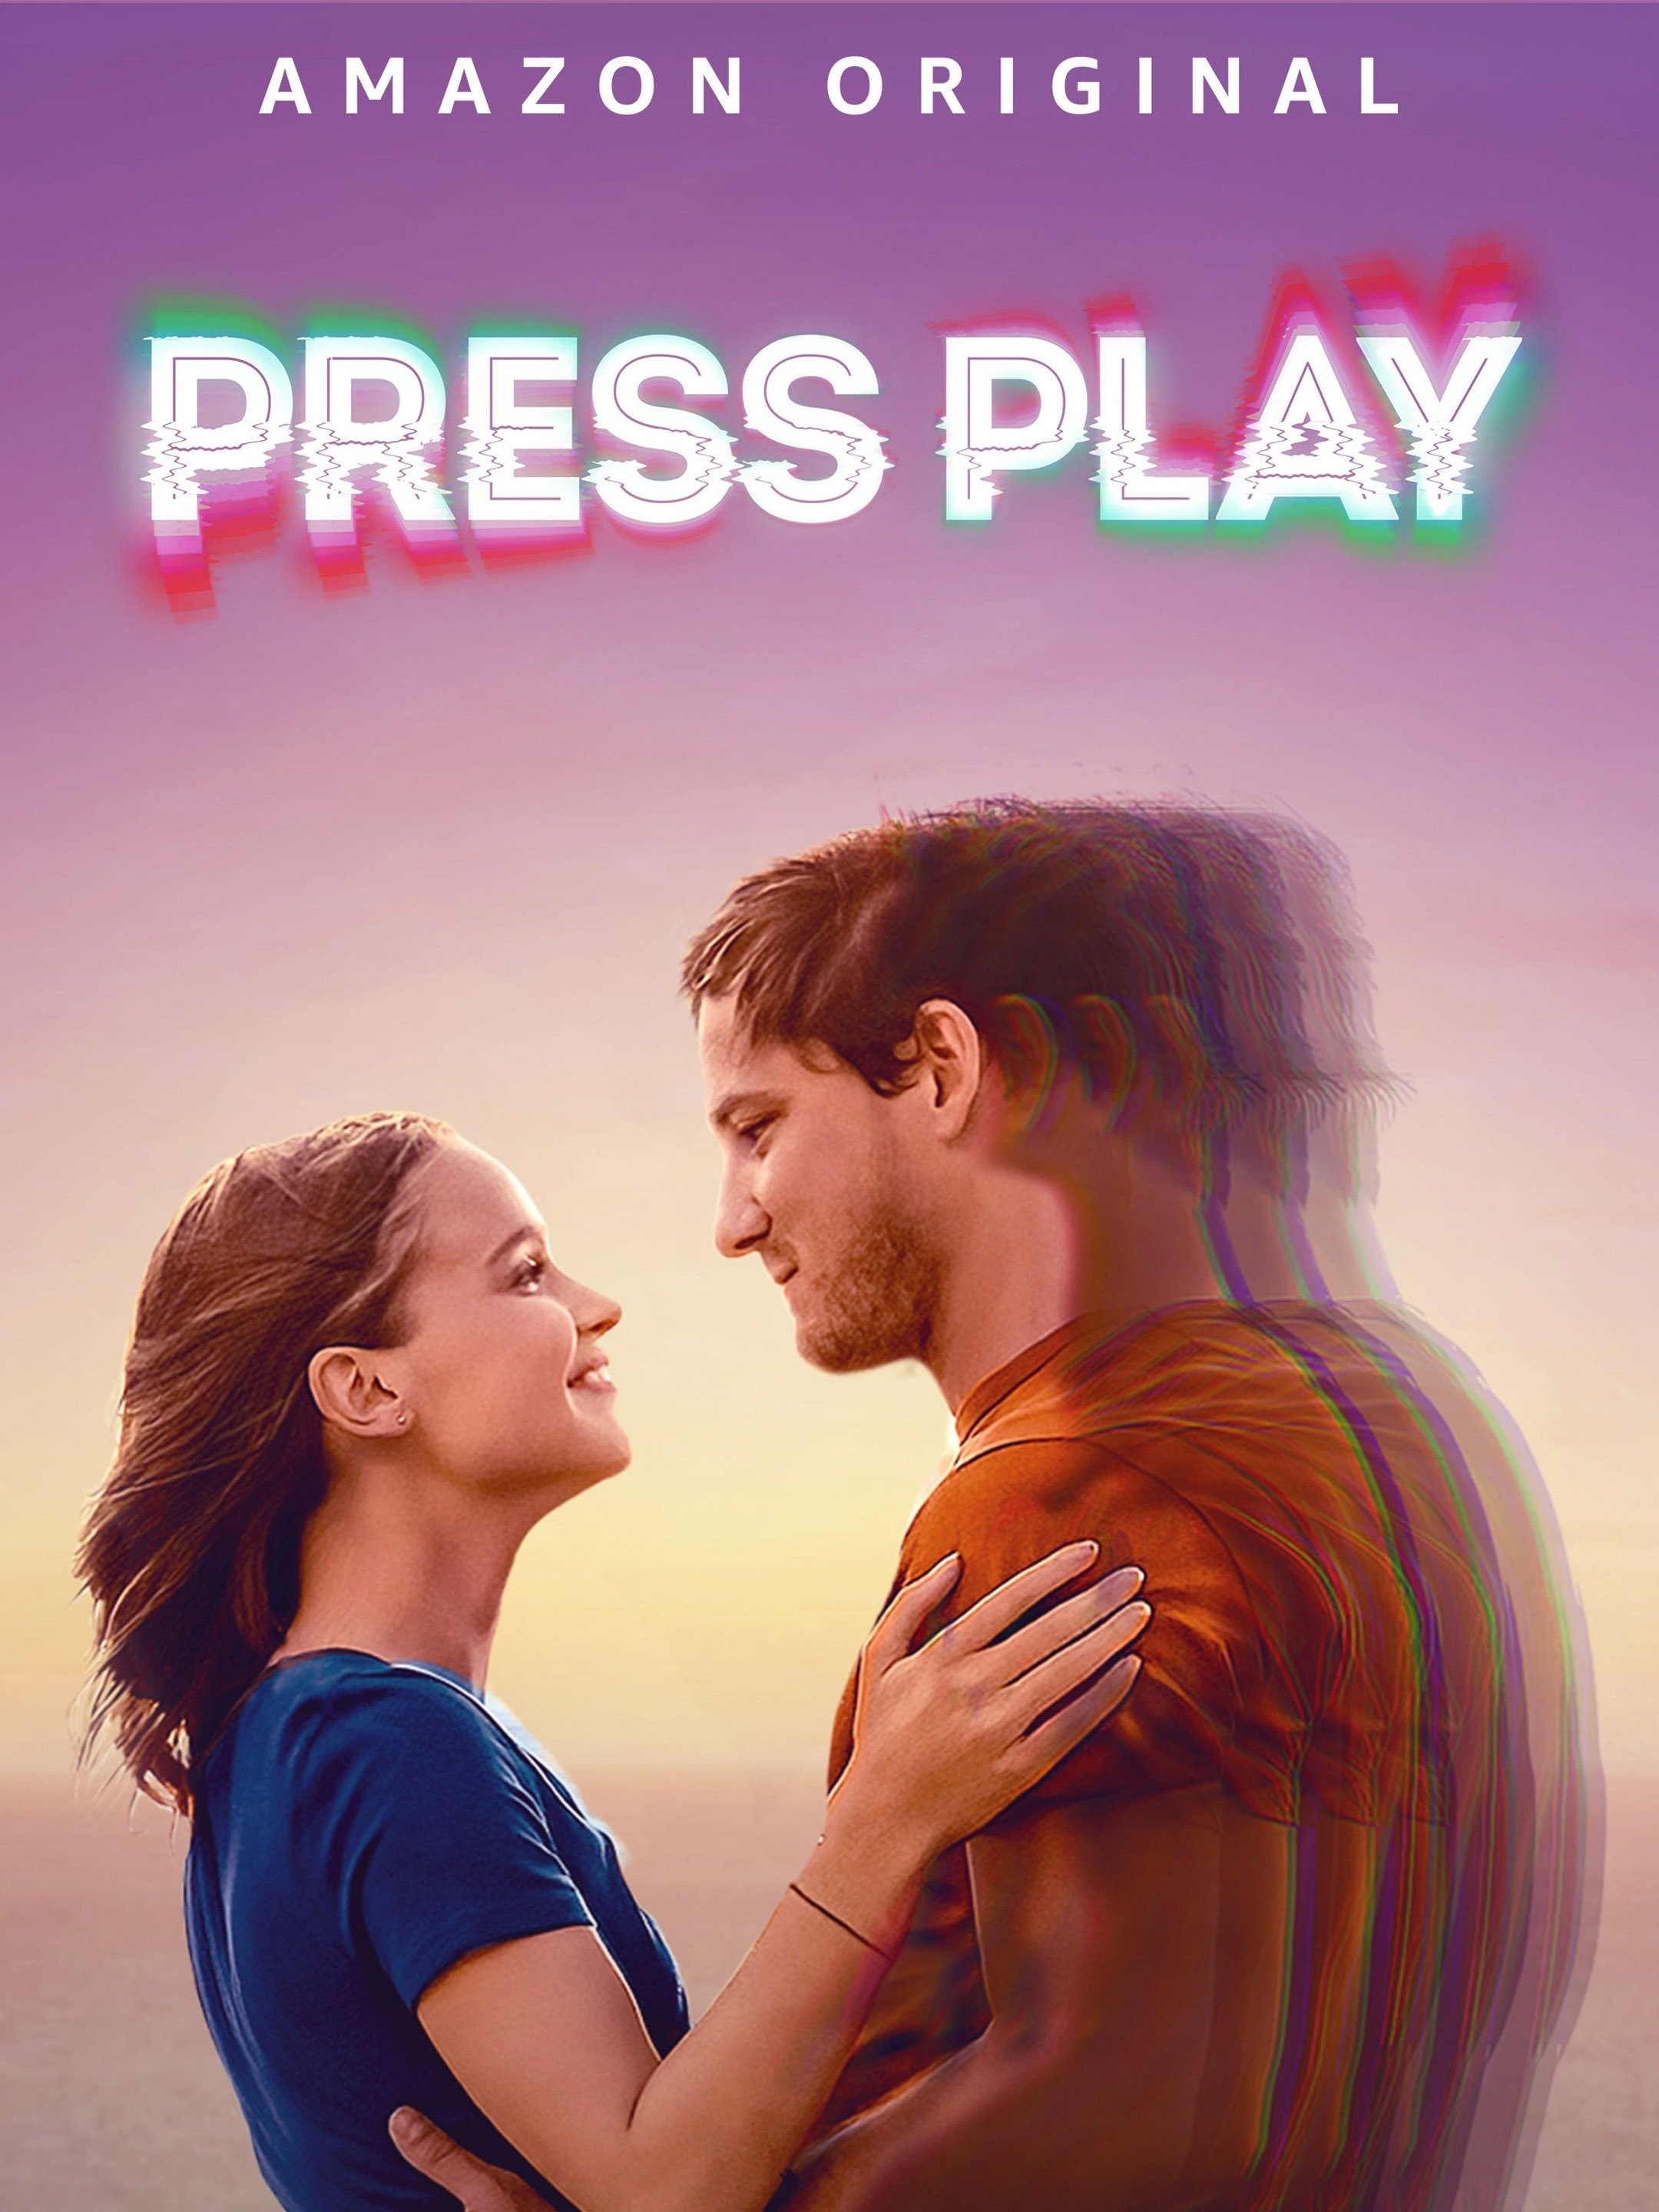 PressPlayFilms  Press Play Films